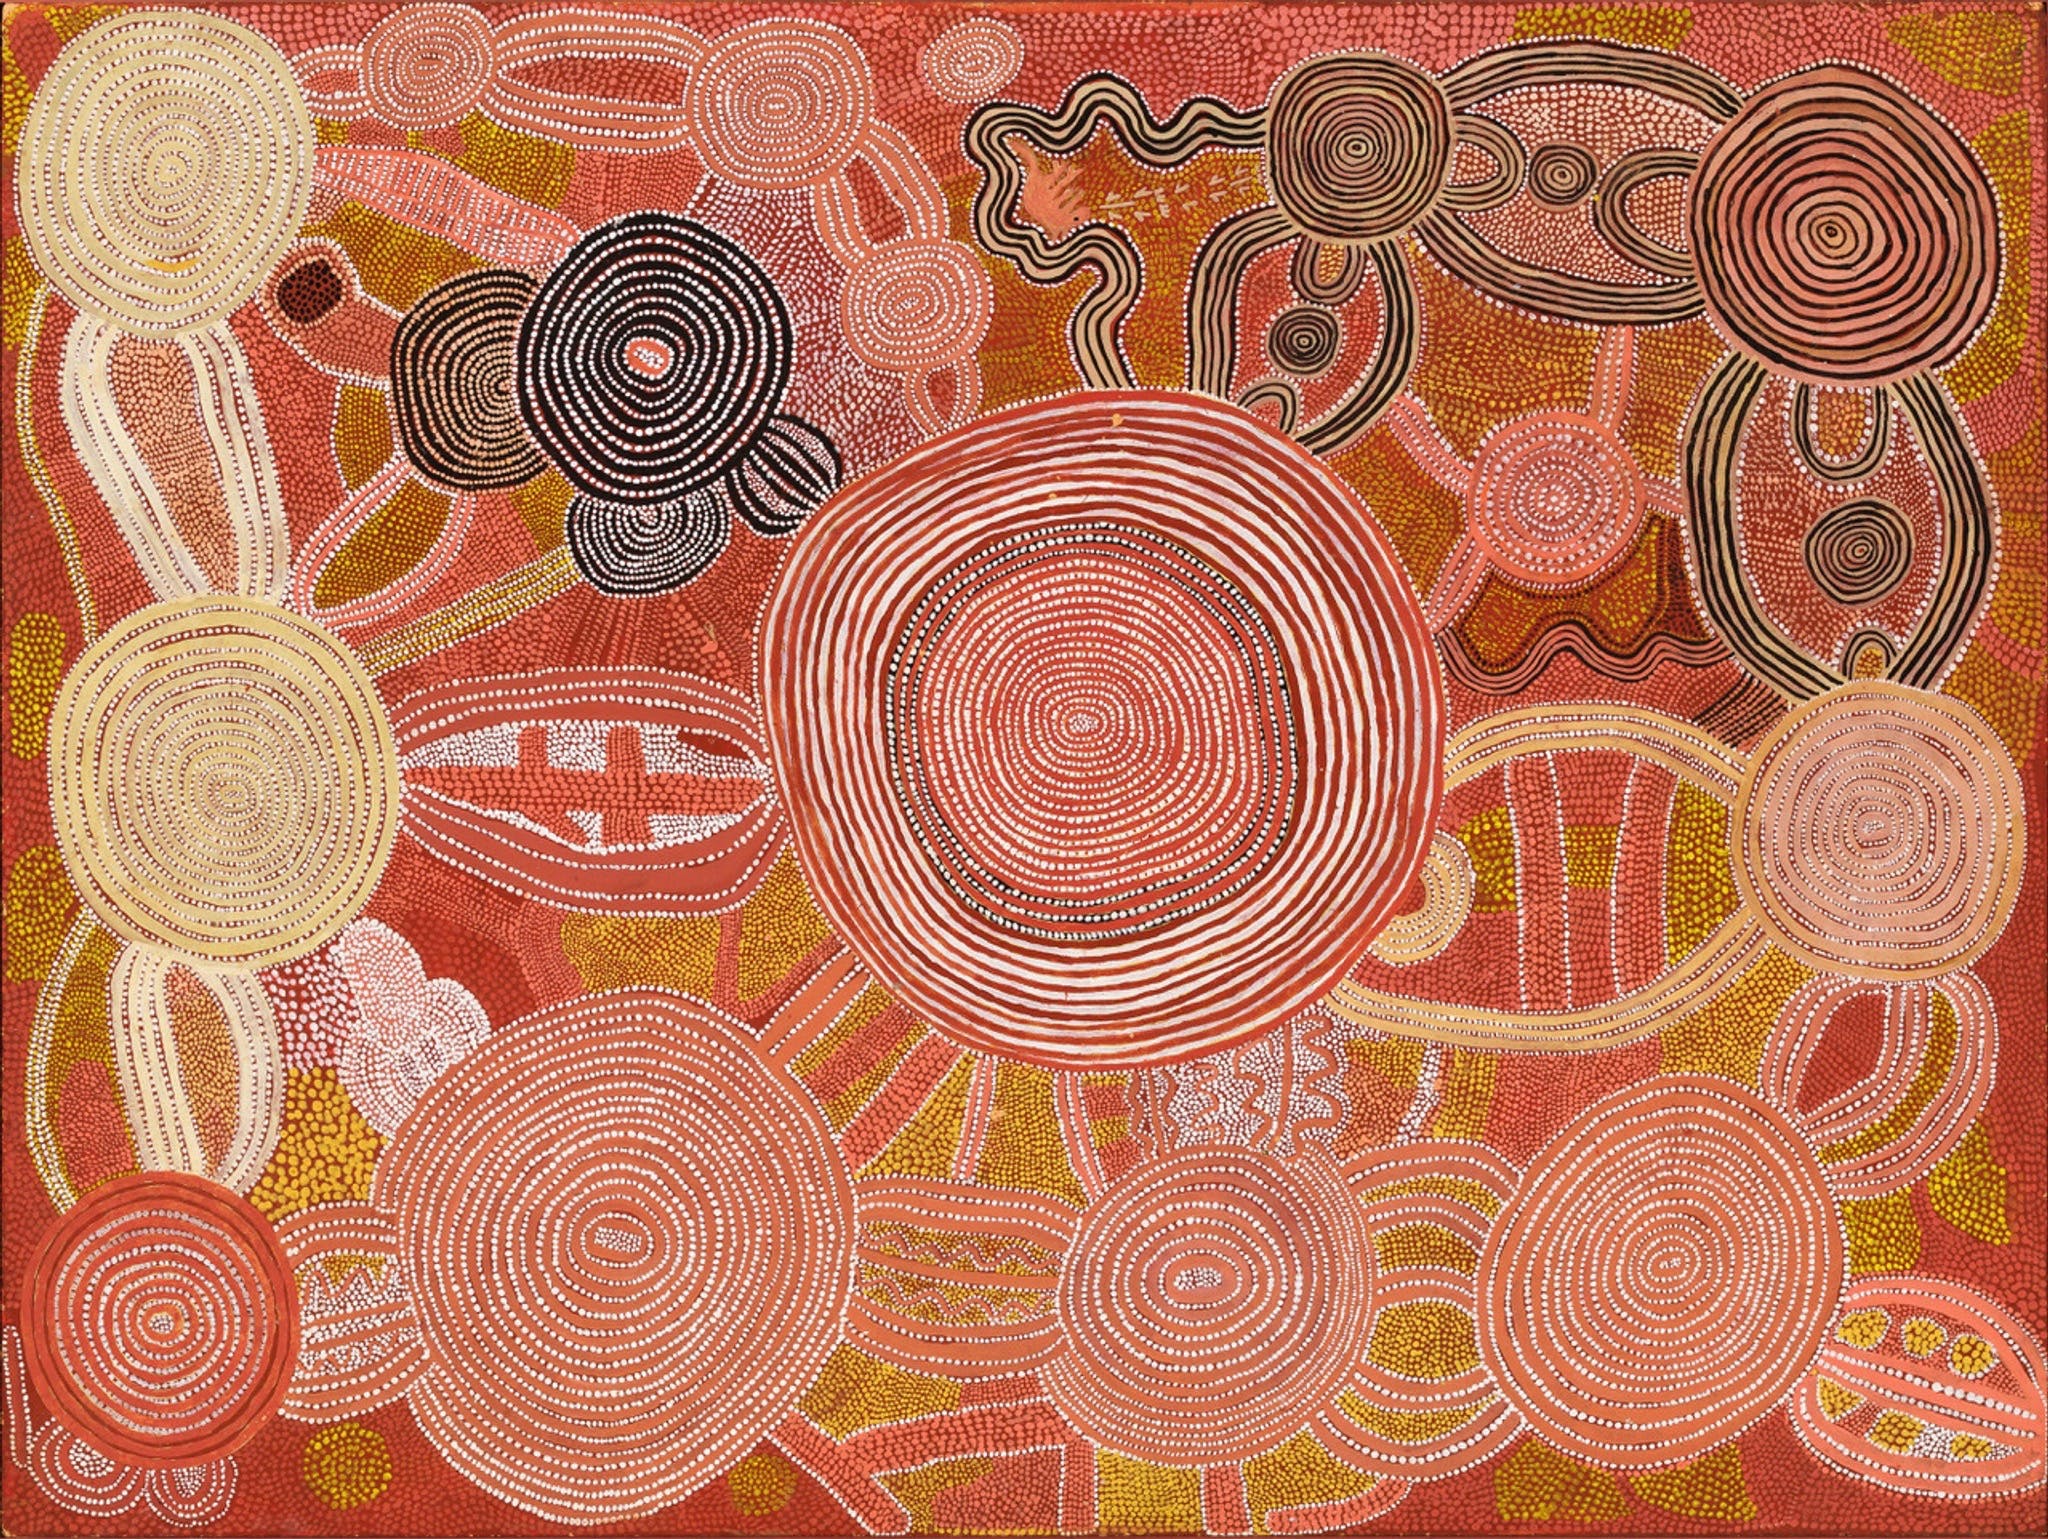 Reverence Exhibition of Australian Indigenous Art - Accommodation Gold Coast